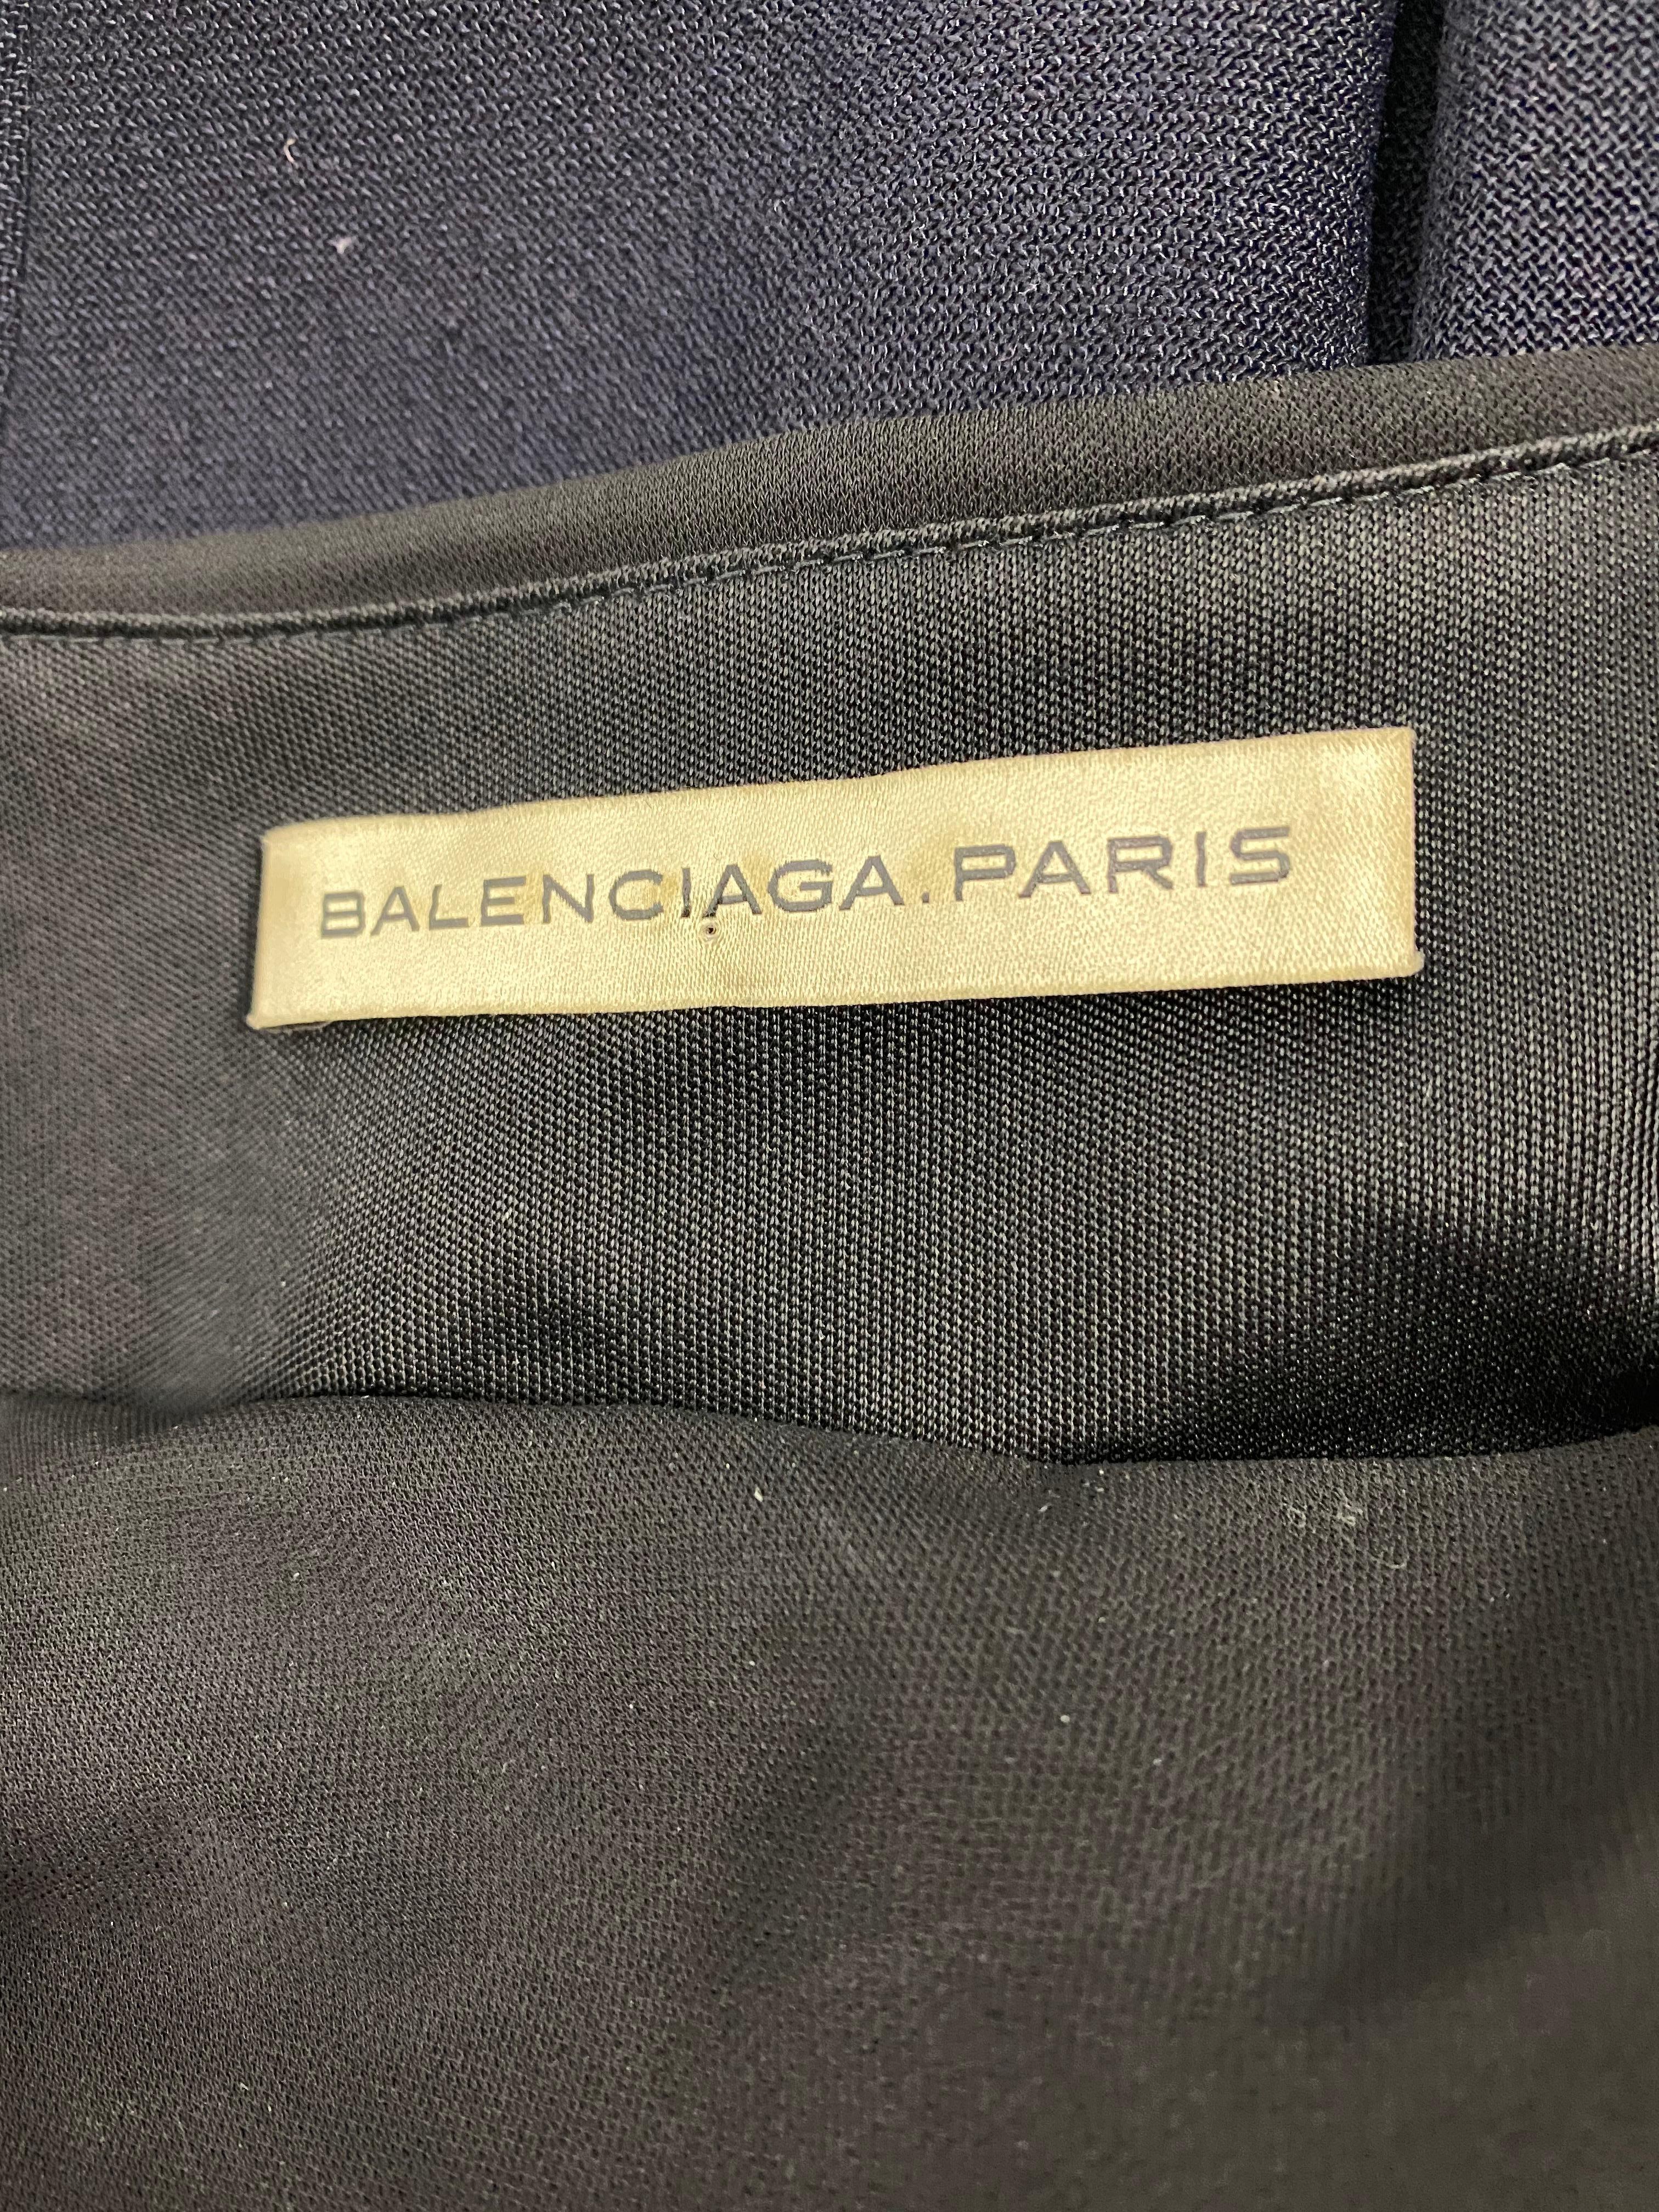 Balenciaga Paris Black and Navy Short Sleeves Dress, Size 40 For Sale 2